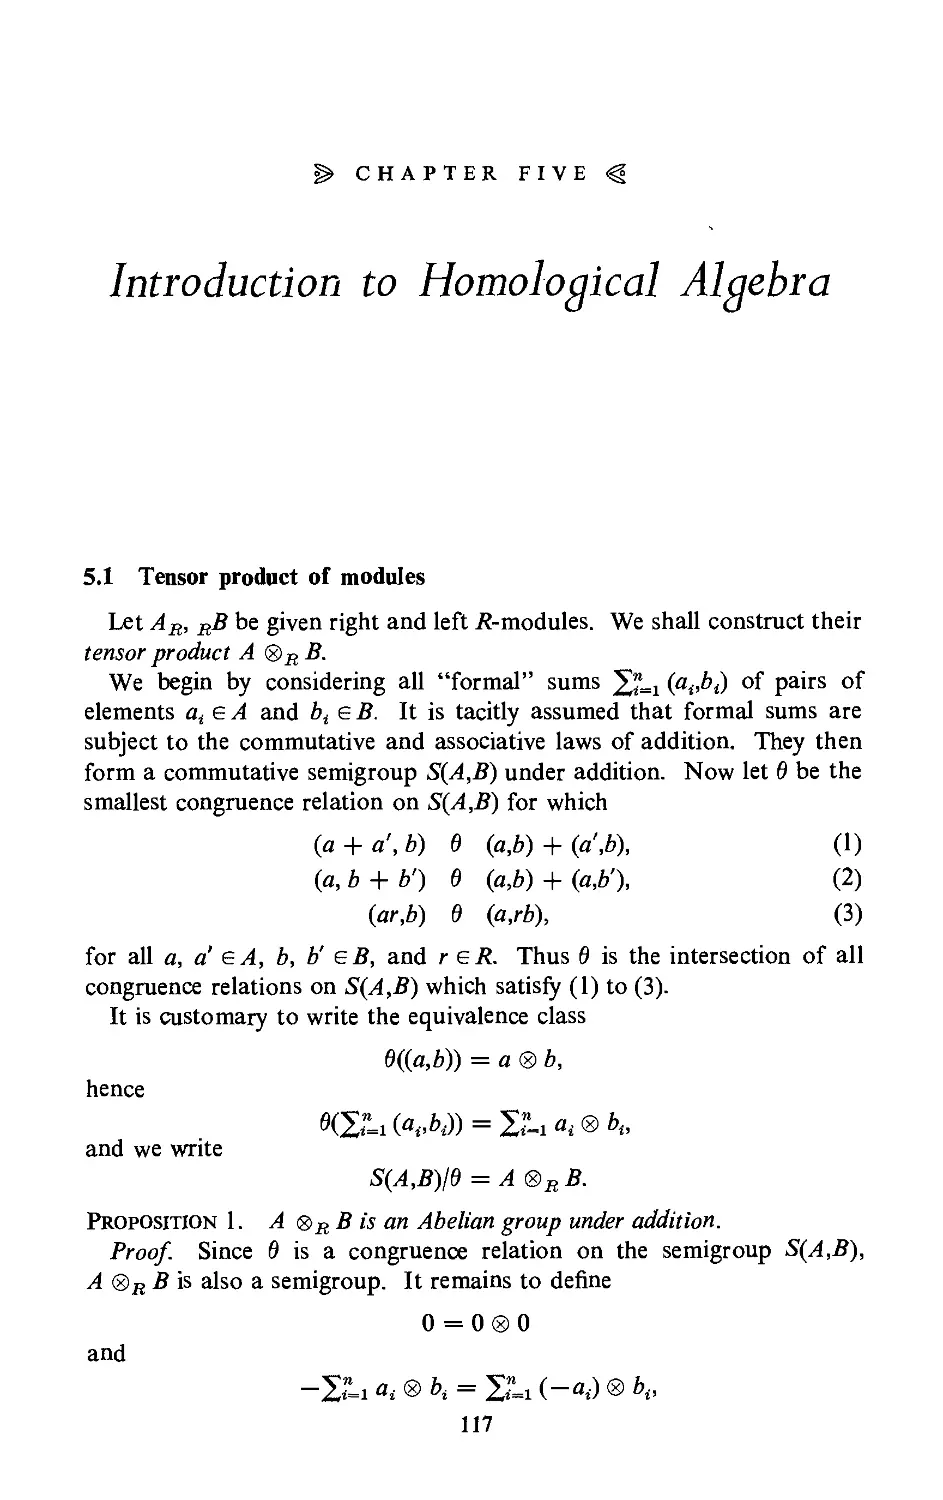 5. Introduction to Homological Algebra